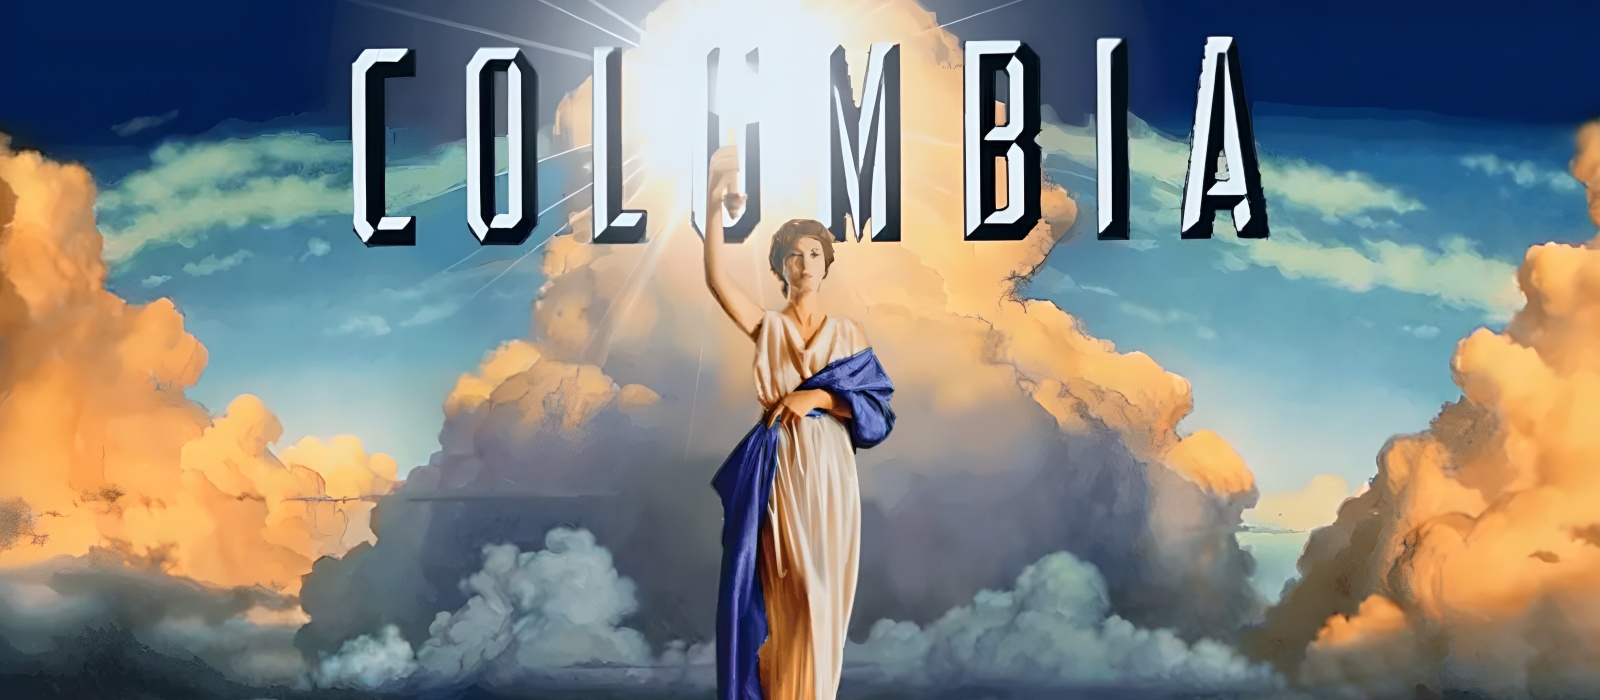 Коламбия пикчерз год. Columbia Кинокомпания. Sony коламбия Пикчерз. Логотип компании коламбия Пикчерз.